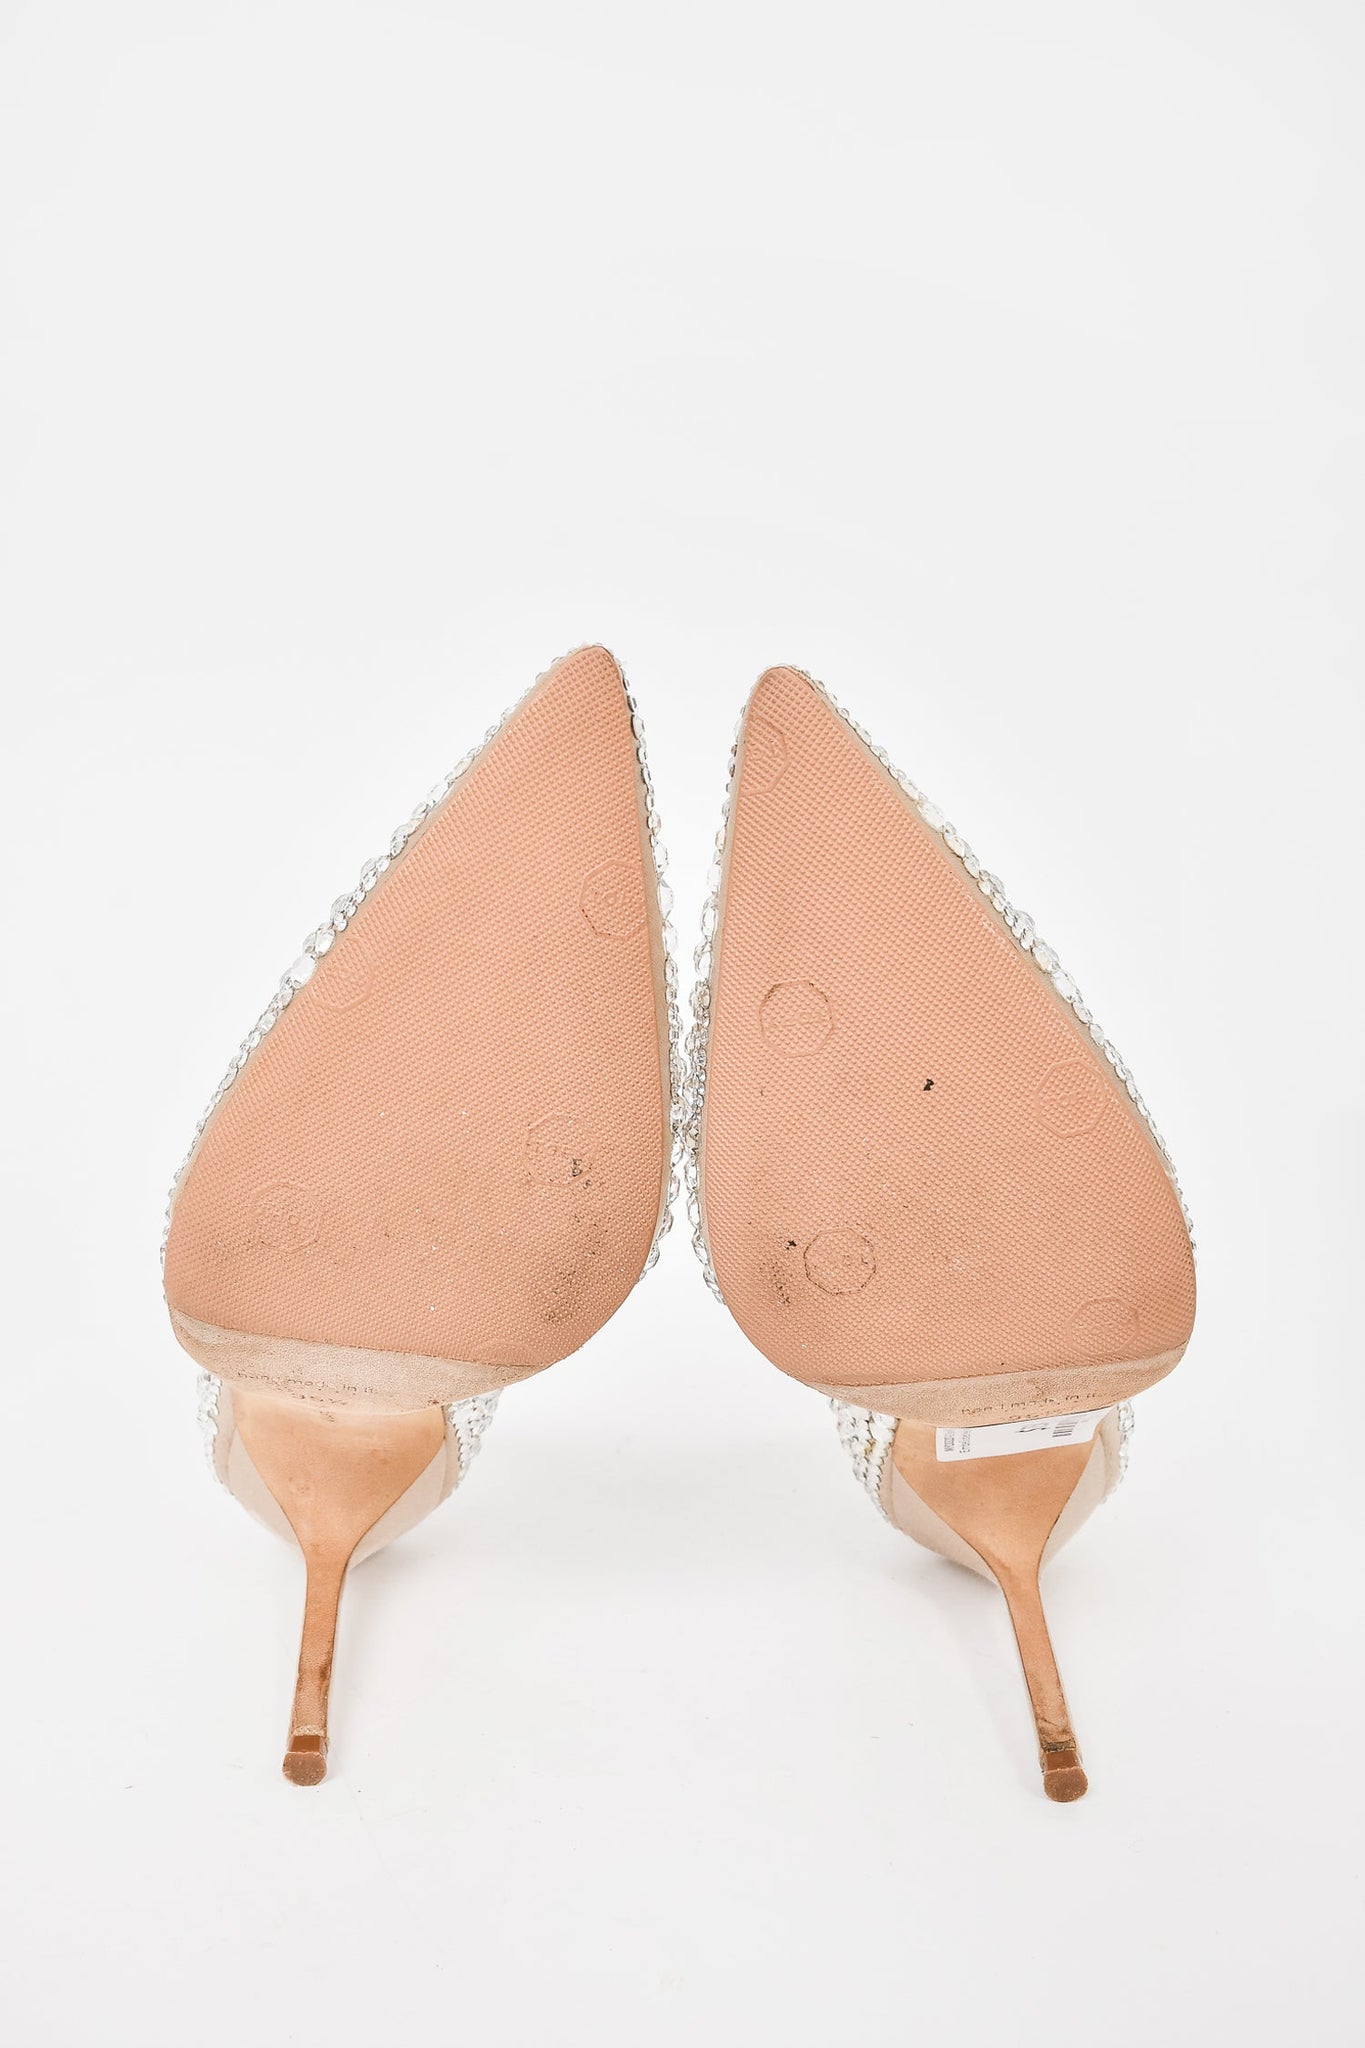 Manolo Blahnik Crystal Embellished Heels sz35.5